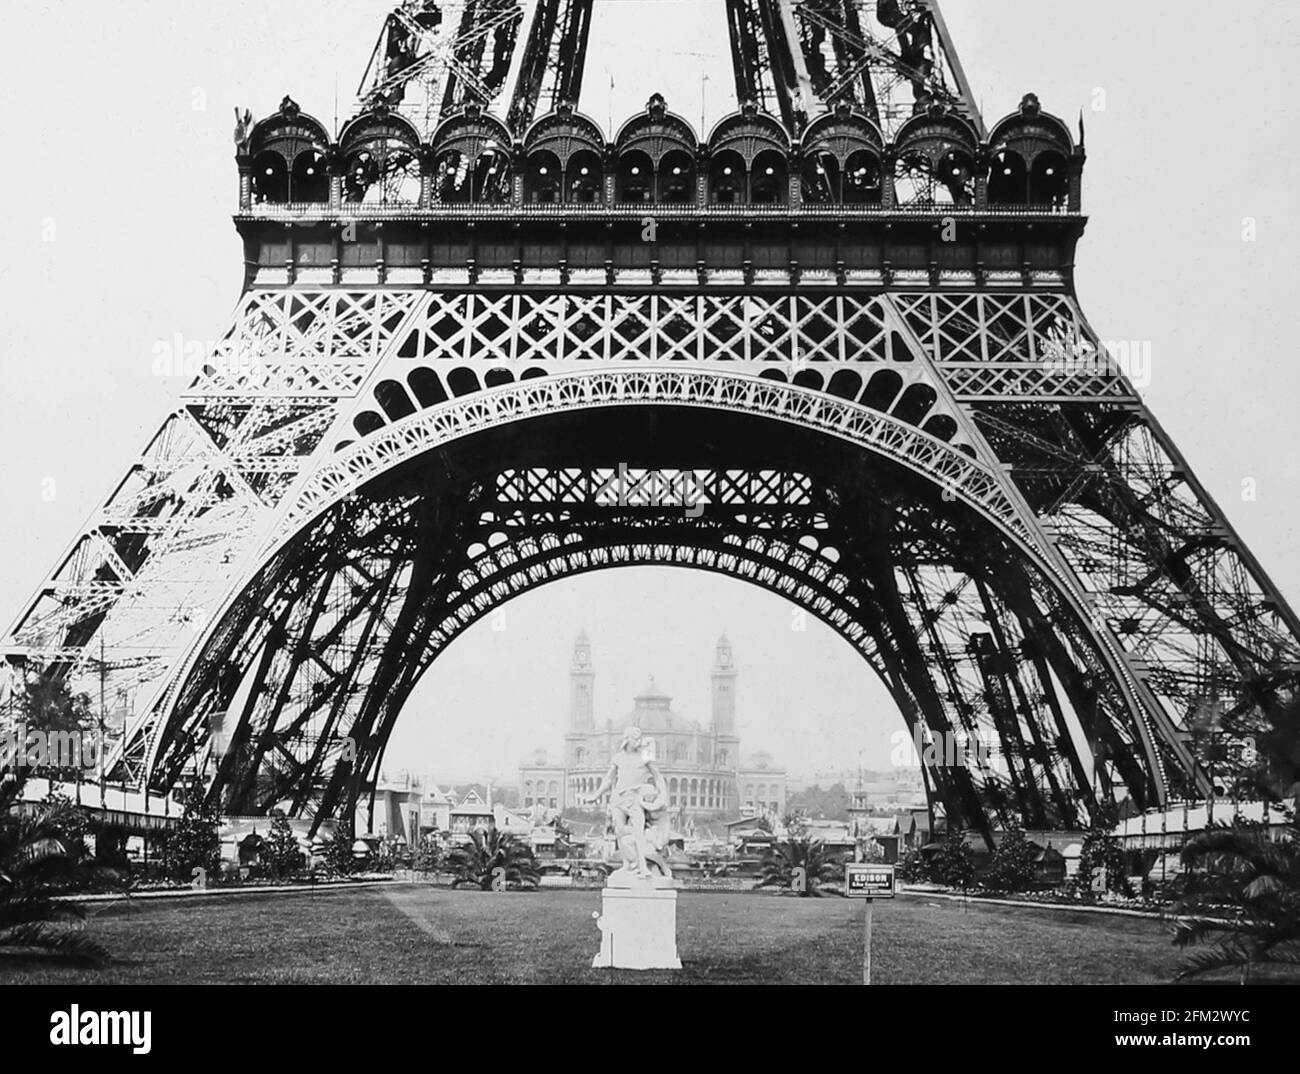 Eiffel Tower, Exposition Universelle, Paris, France Stock Photo